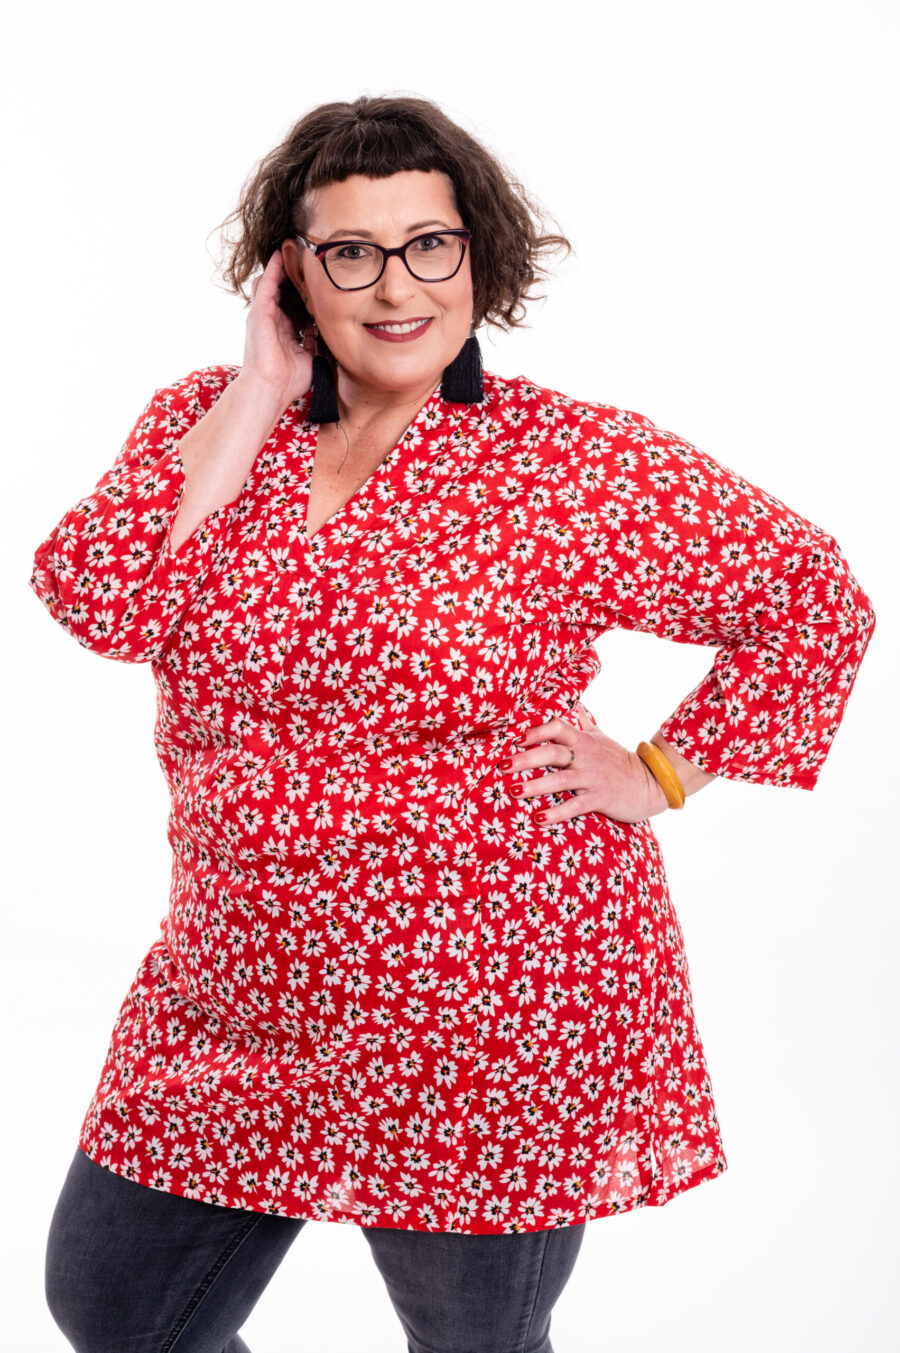 Joy tunic| Uniquely designen Tunic – Floral print on a red dress